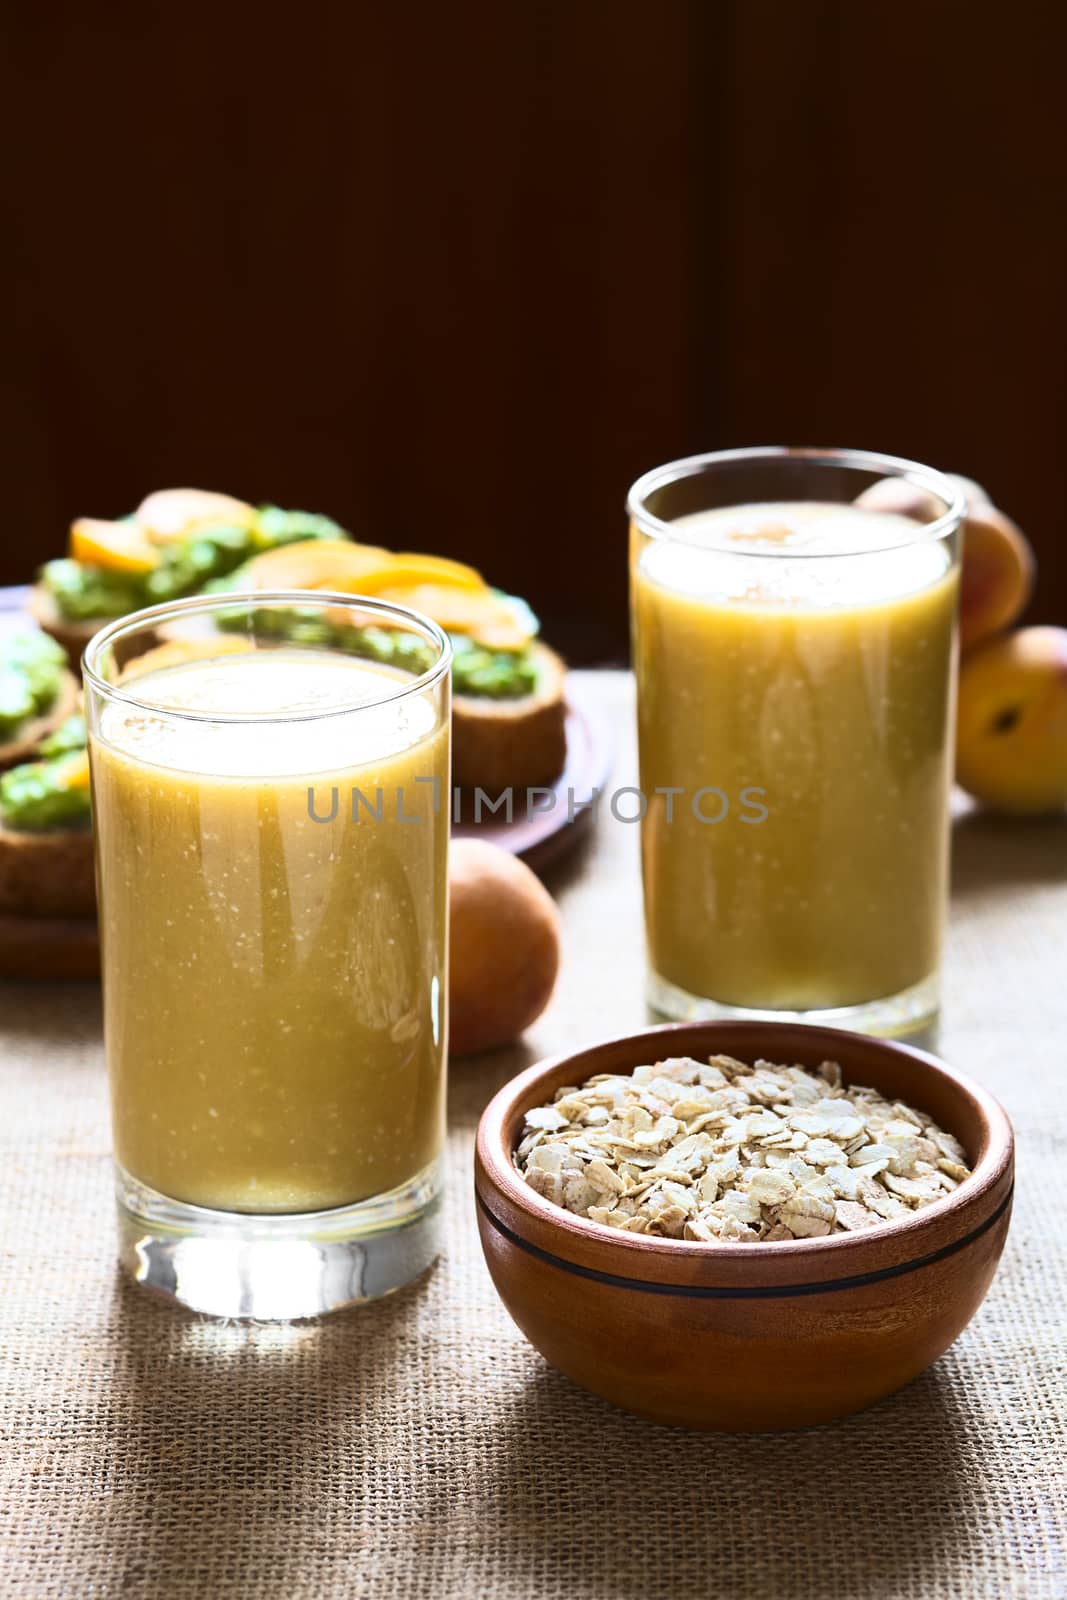 Mango-Oatmeal Milkshake by ildi